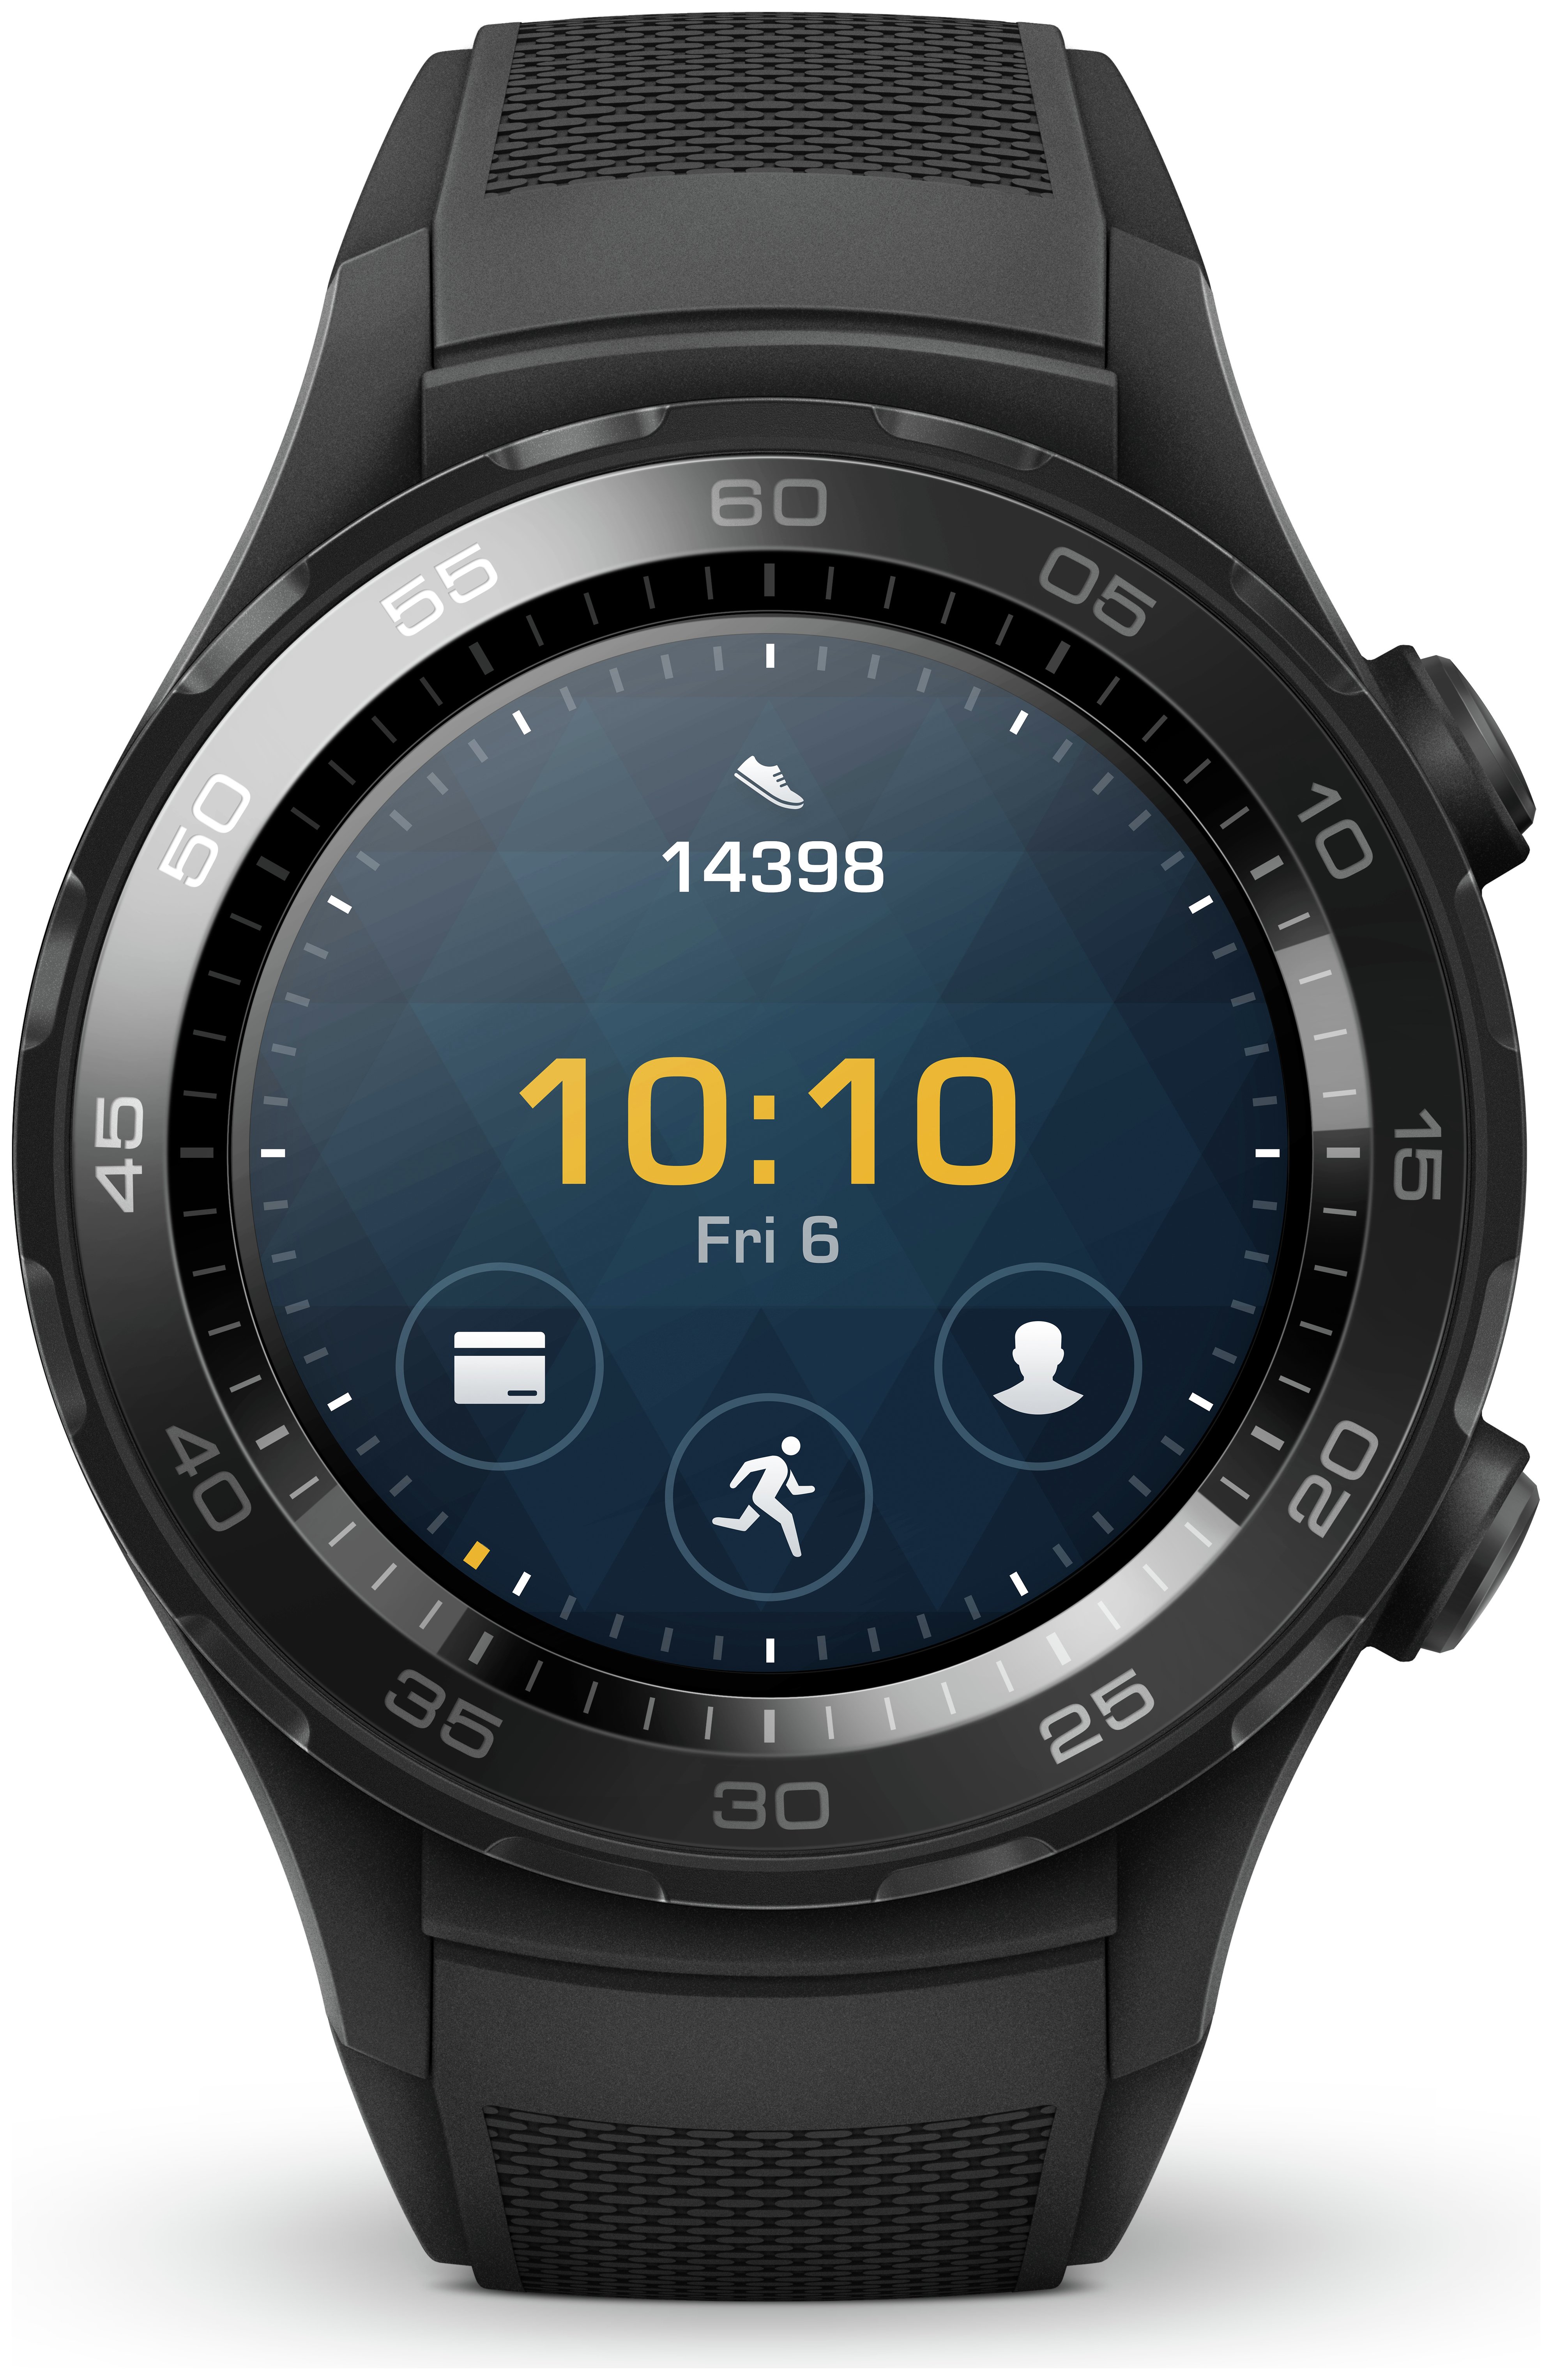 Huawei Watch 2 Bluetooth Sport Smart Watch review